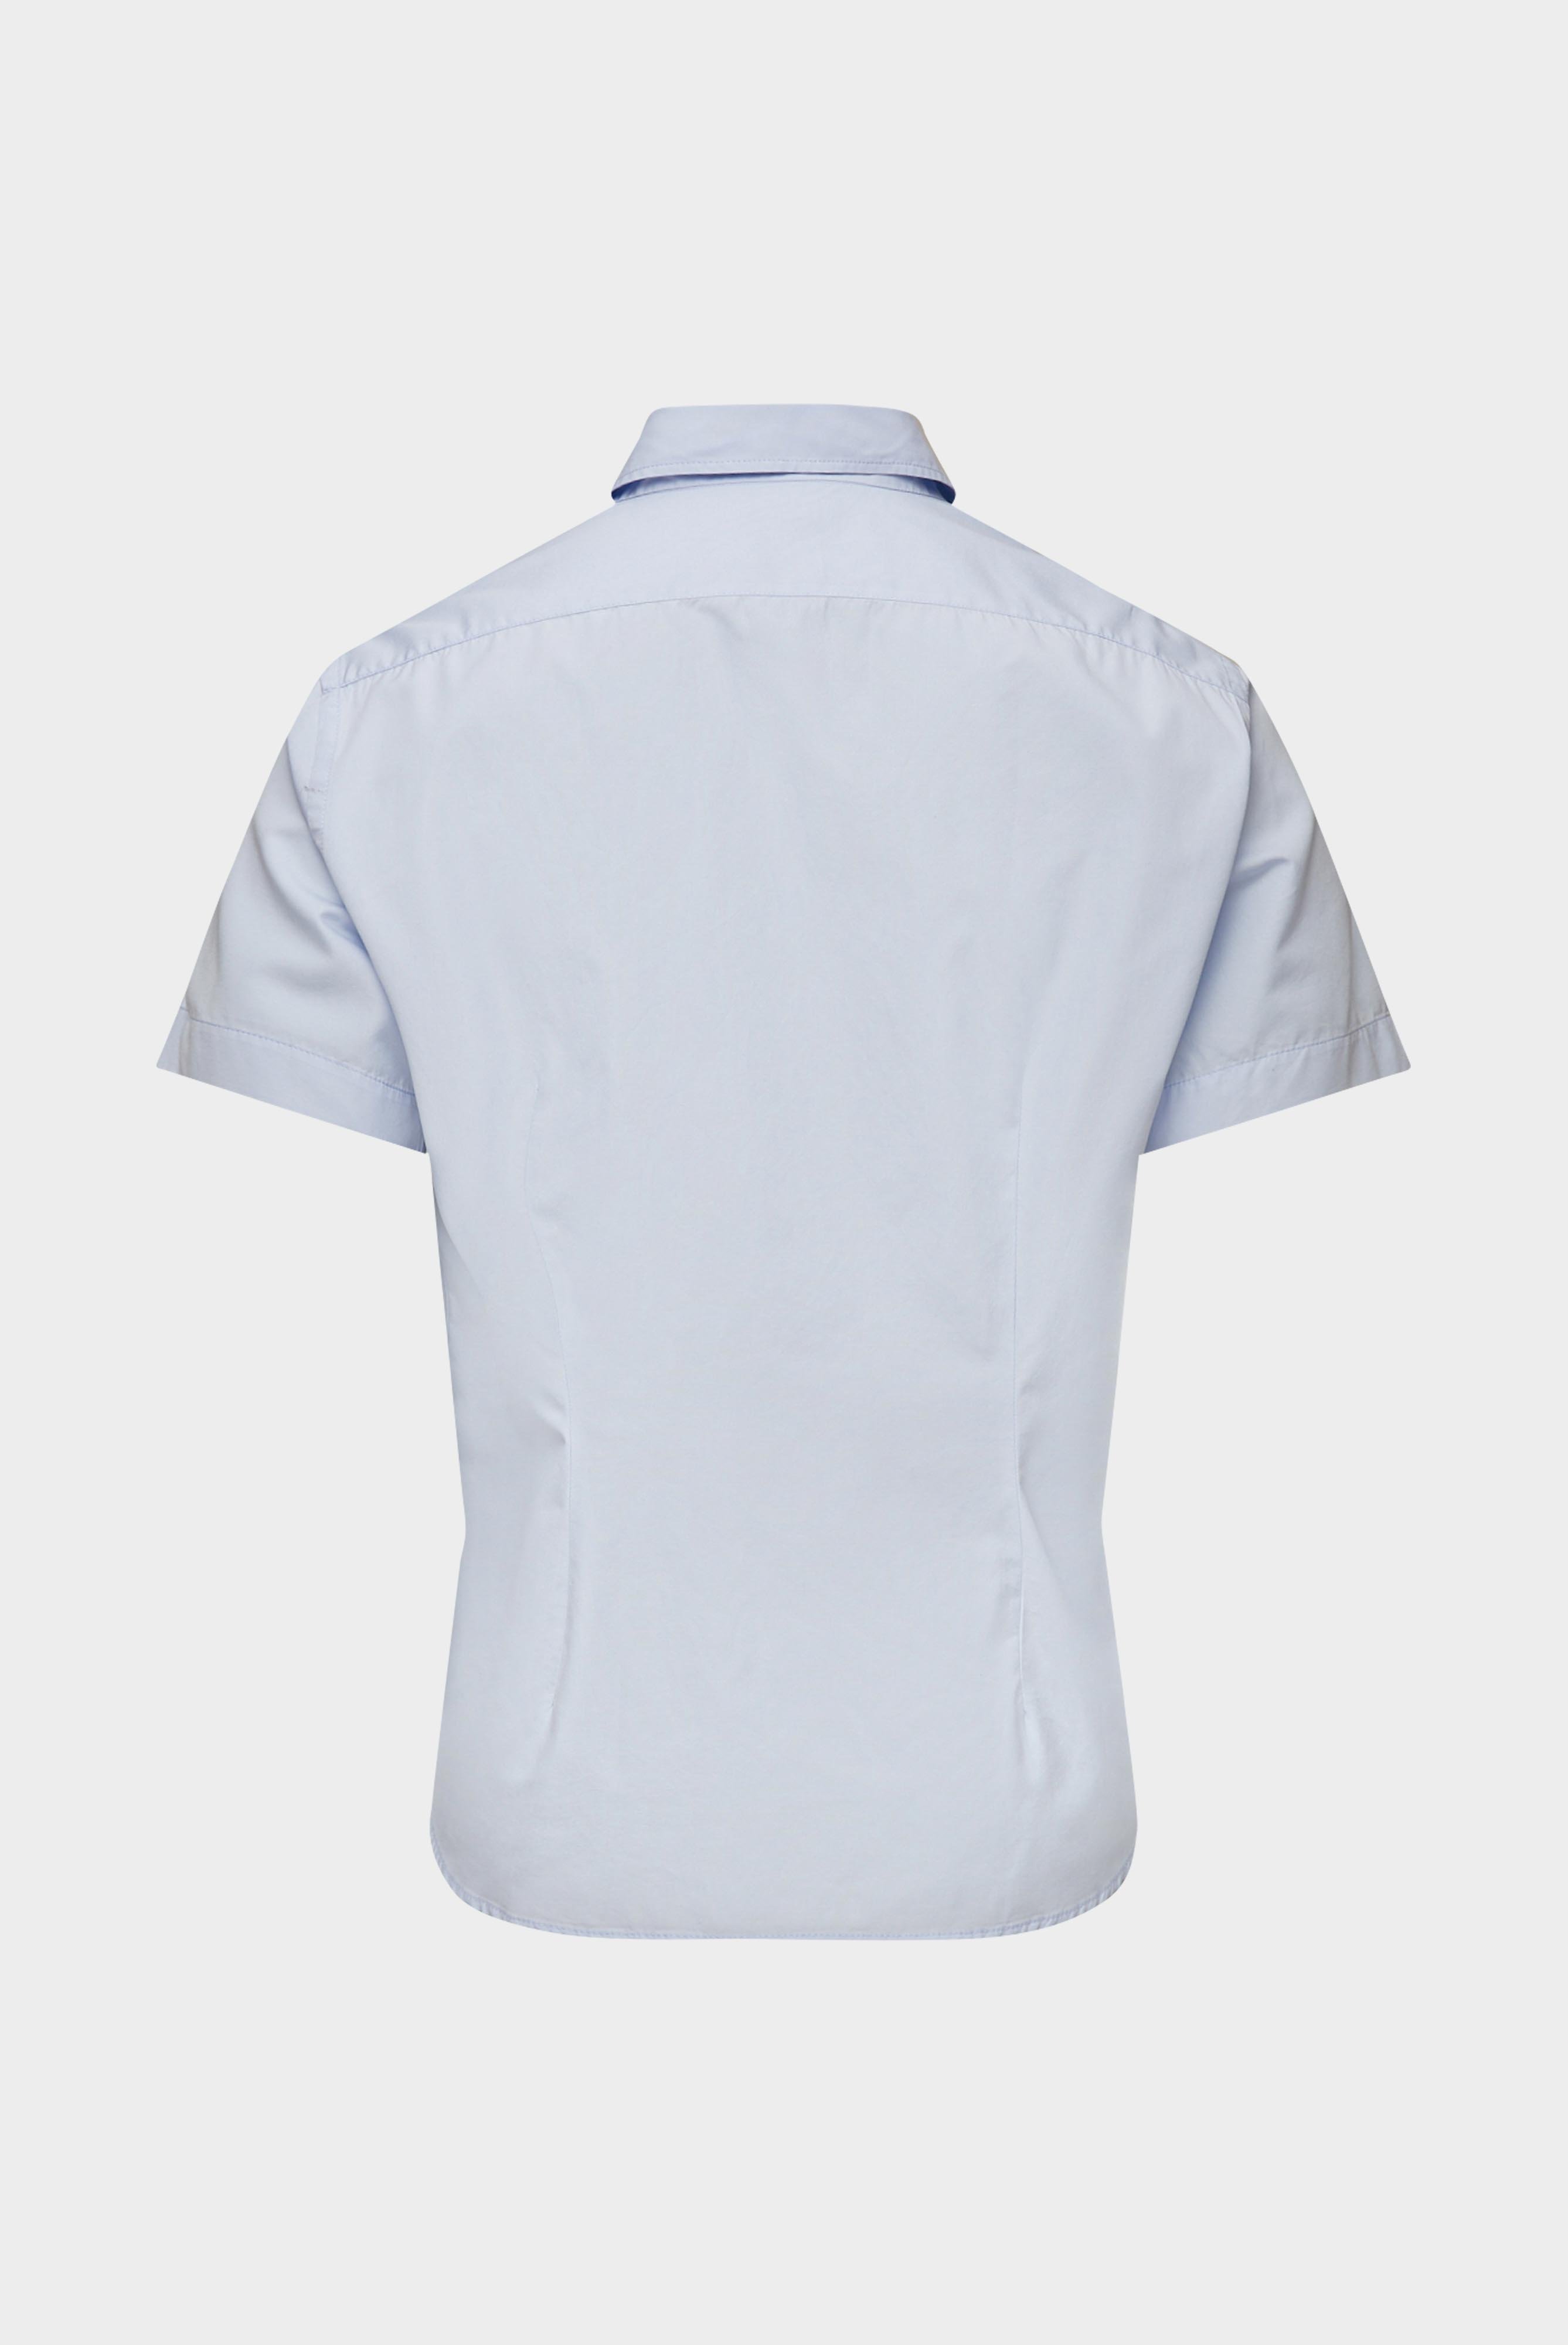 Casual Hemden+Kurzarm Hemd aus Baumwollpopeline+20.2053.Q2.130648.715.38